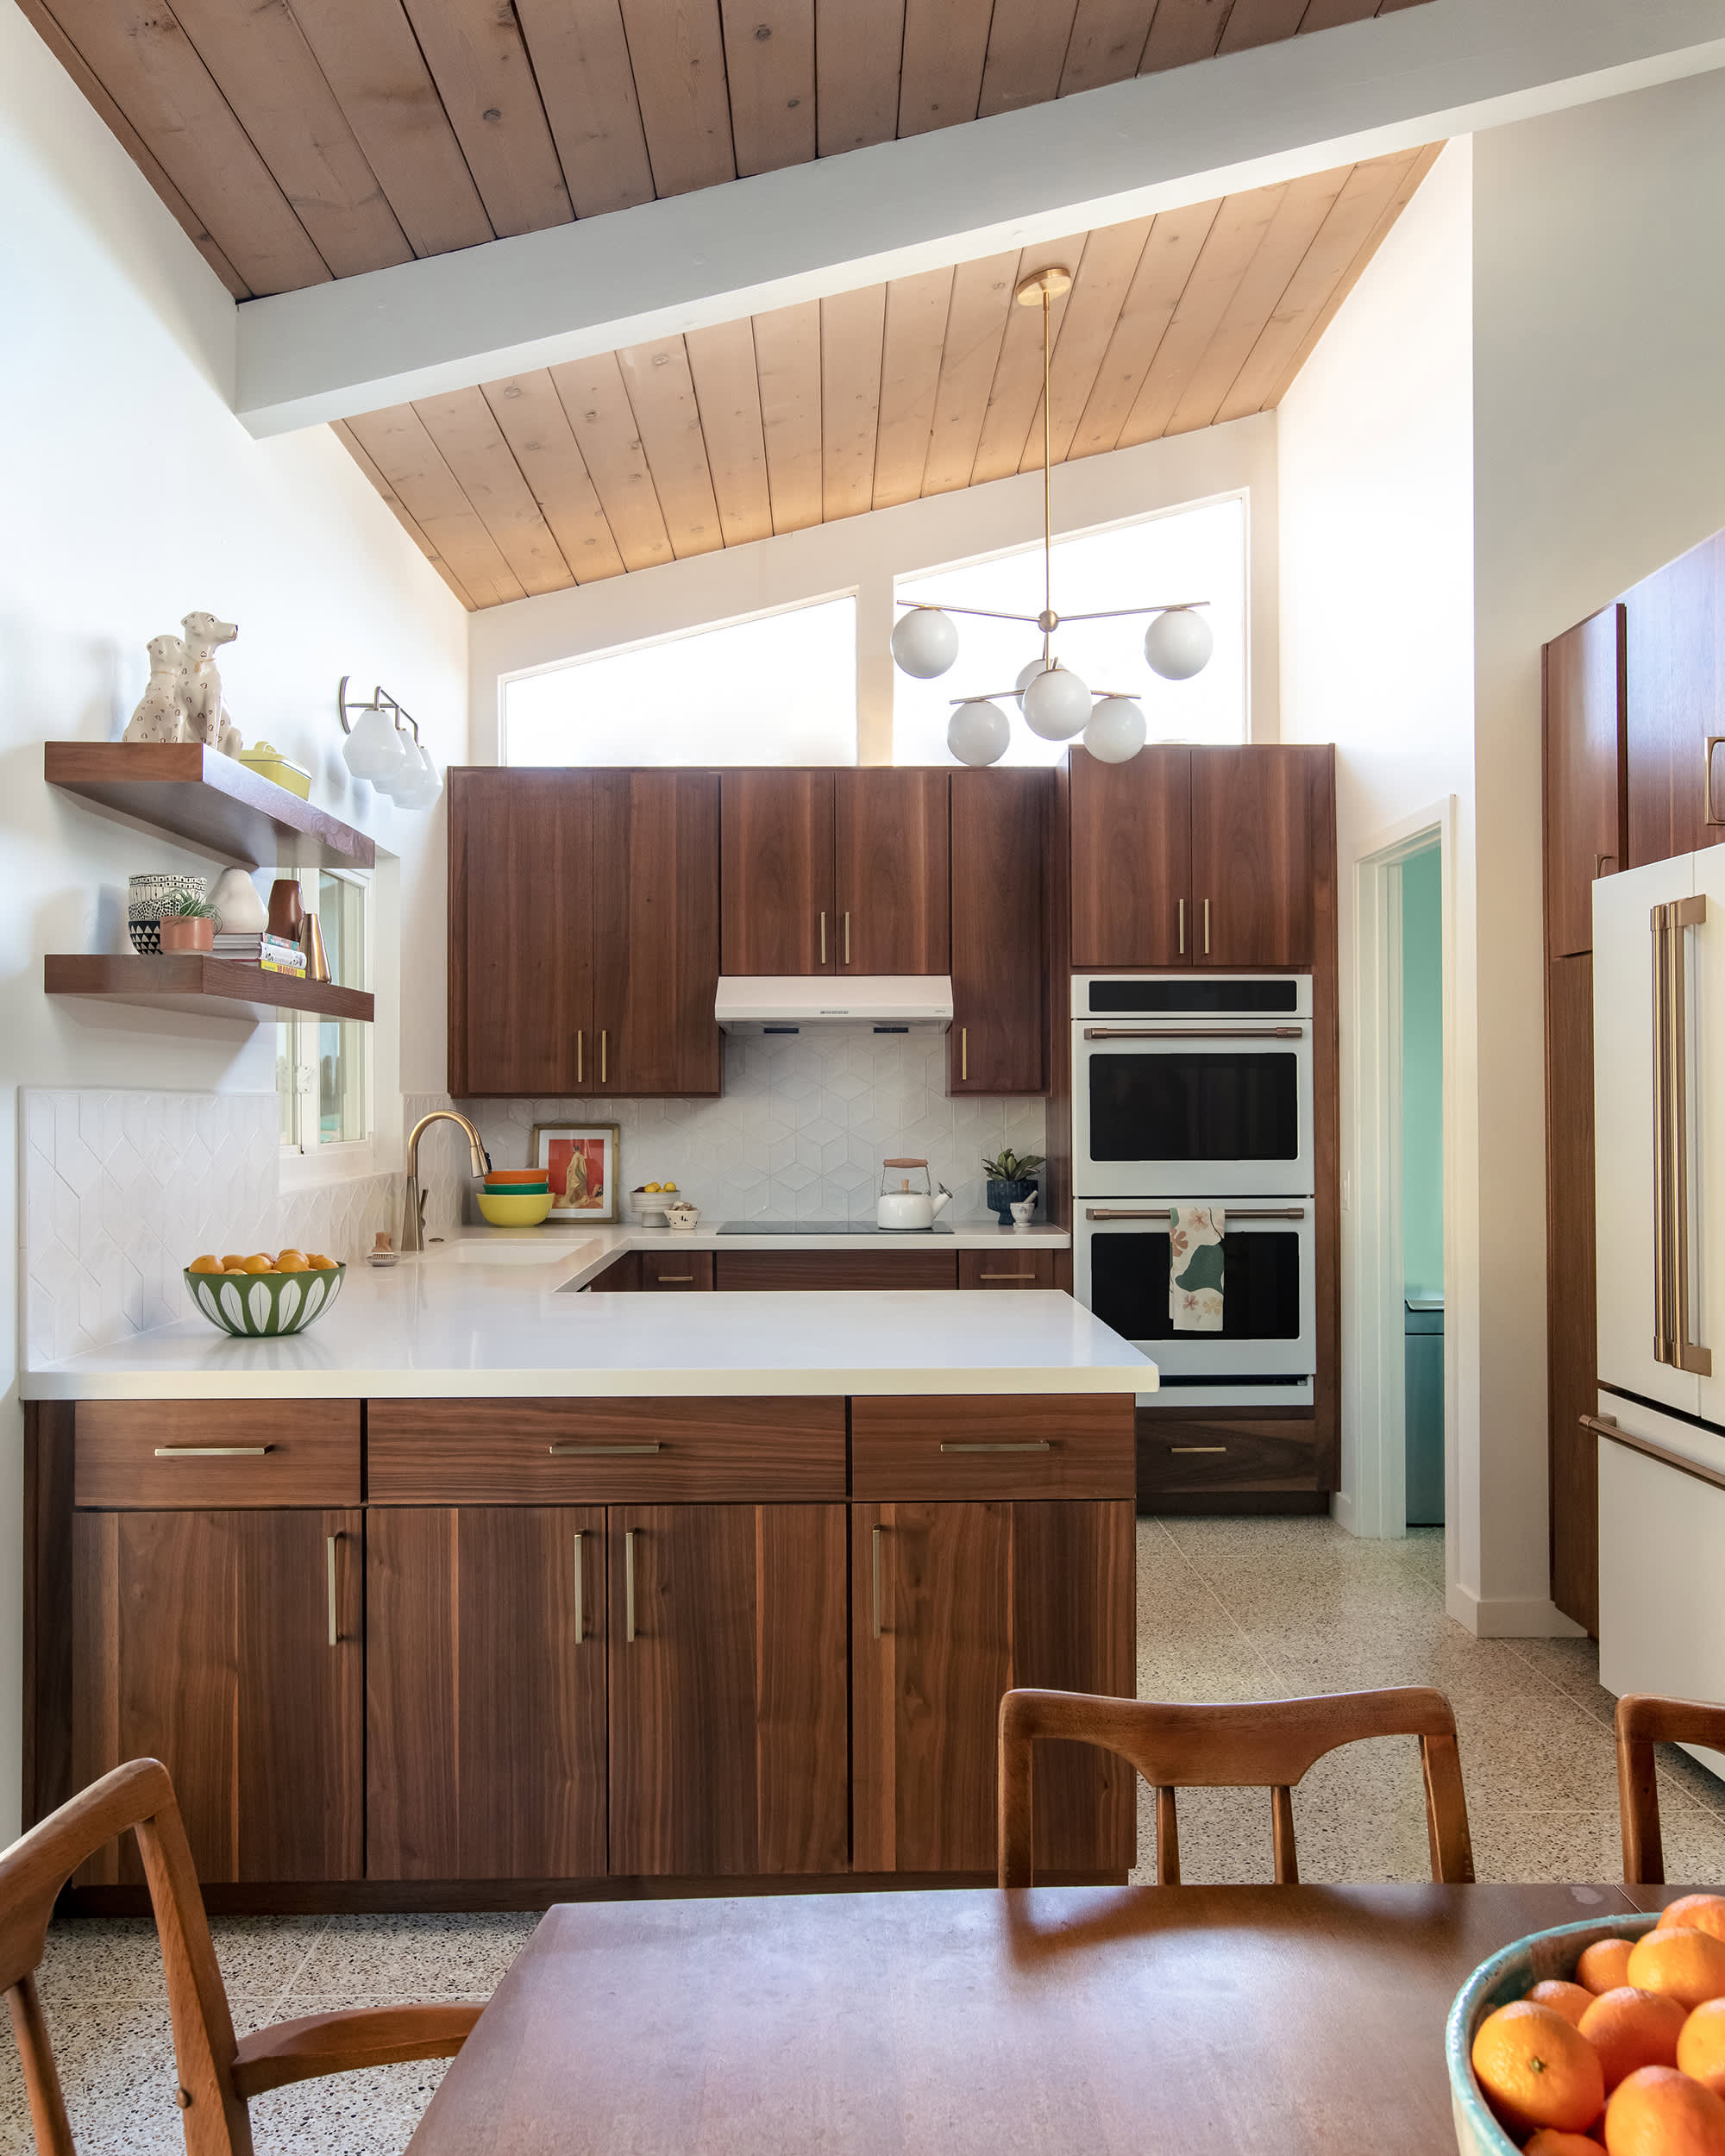 https://cdn.apartmenttherapy.info/image/upload/v1700169829/at/style/2023-12/designer-mid-century-modern-kitchen-renovation/designer-mid-century-modern-kitchen-renovation-5.jpg